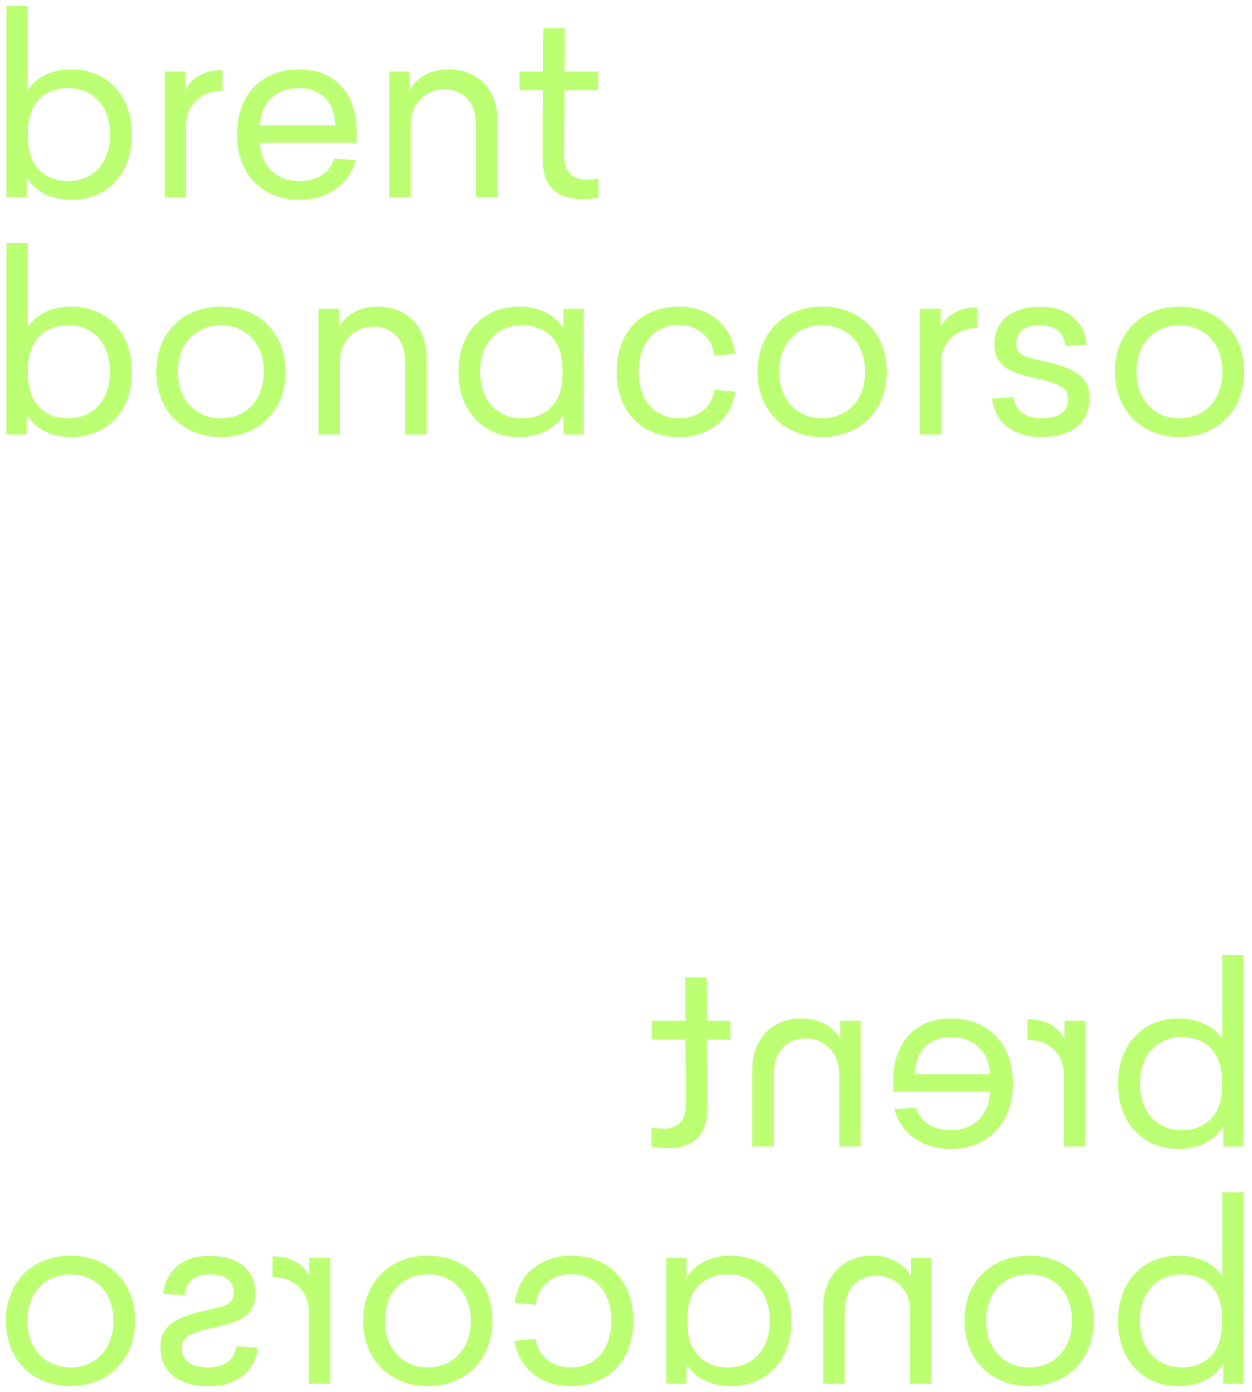 Brent Bonacorso